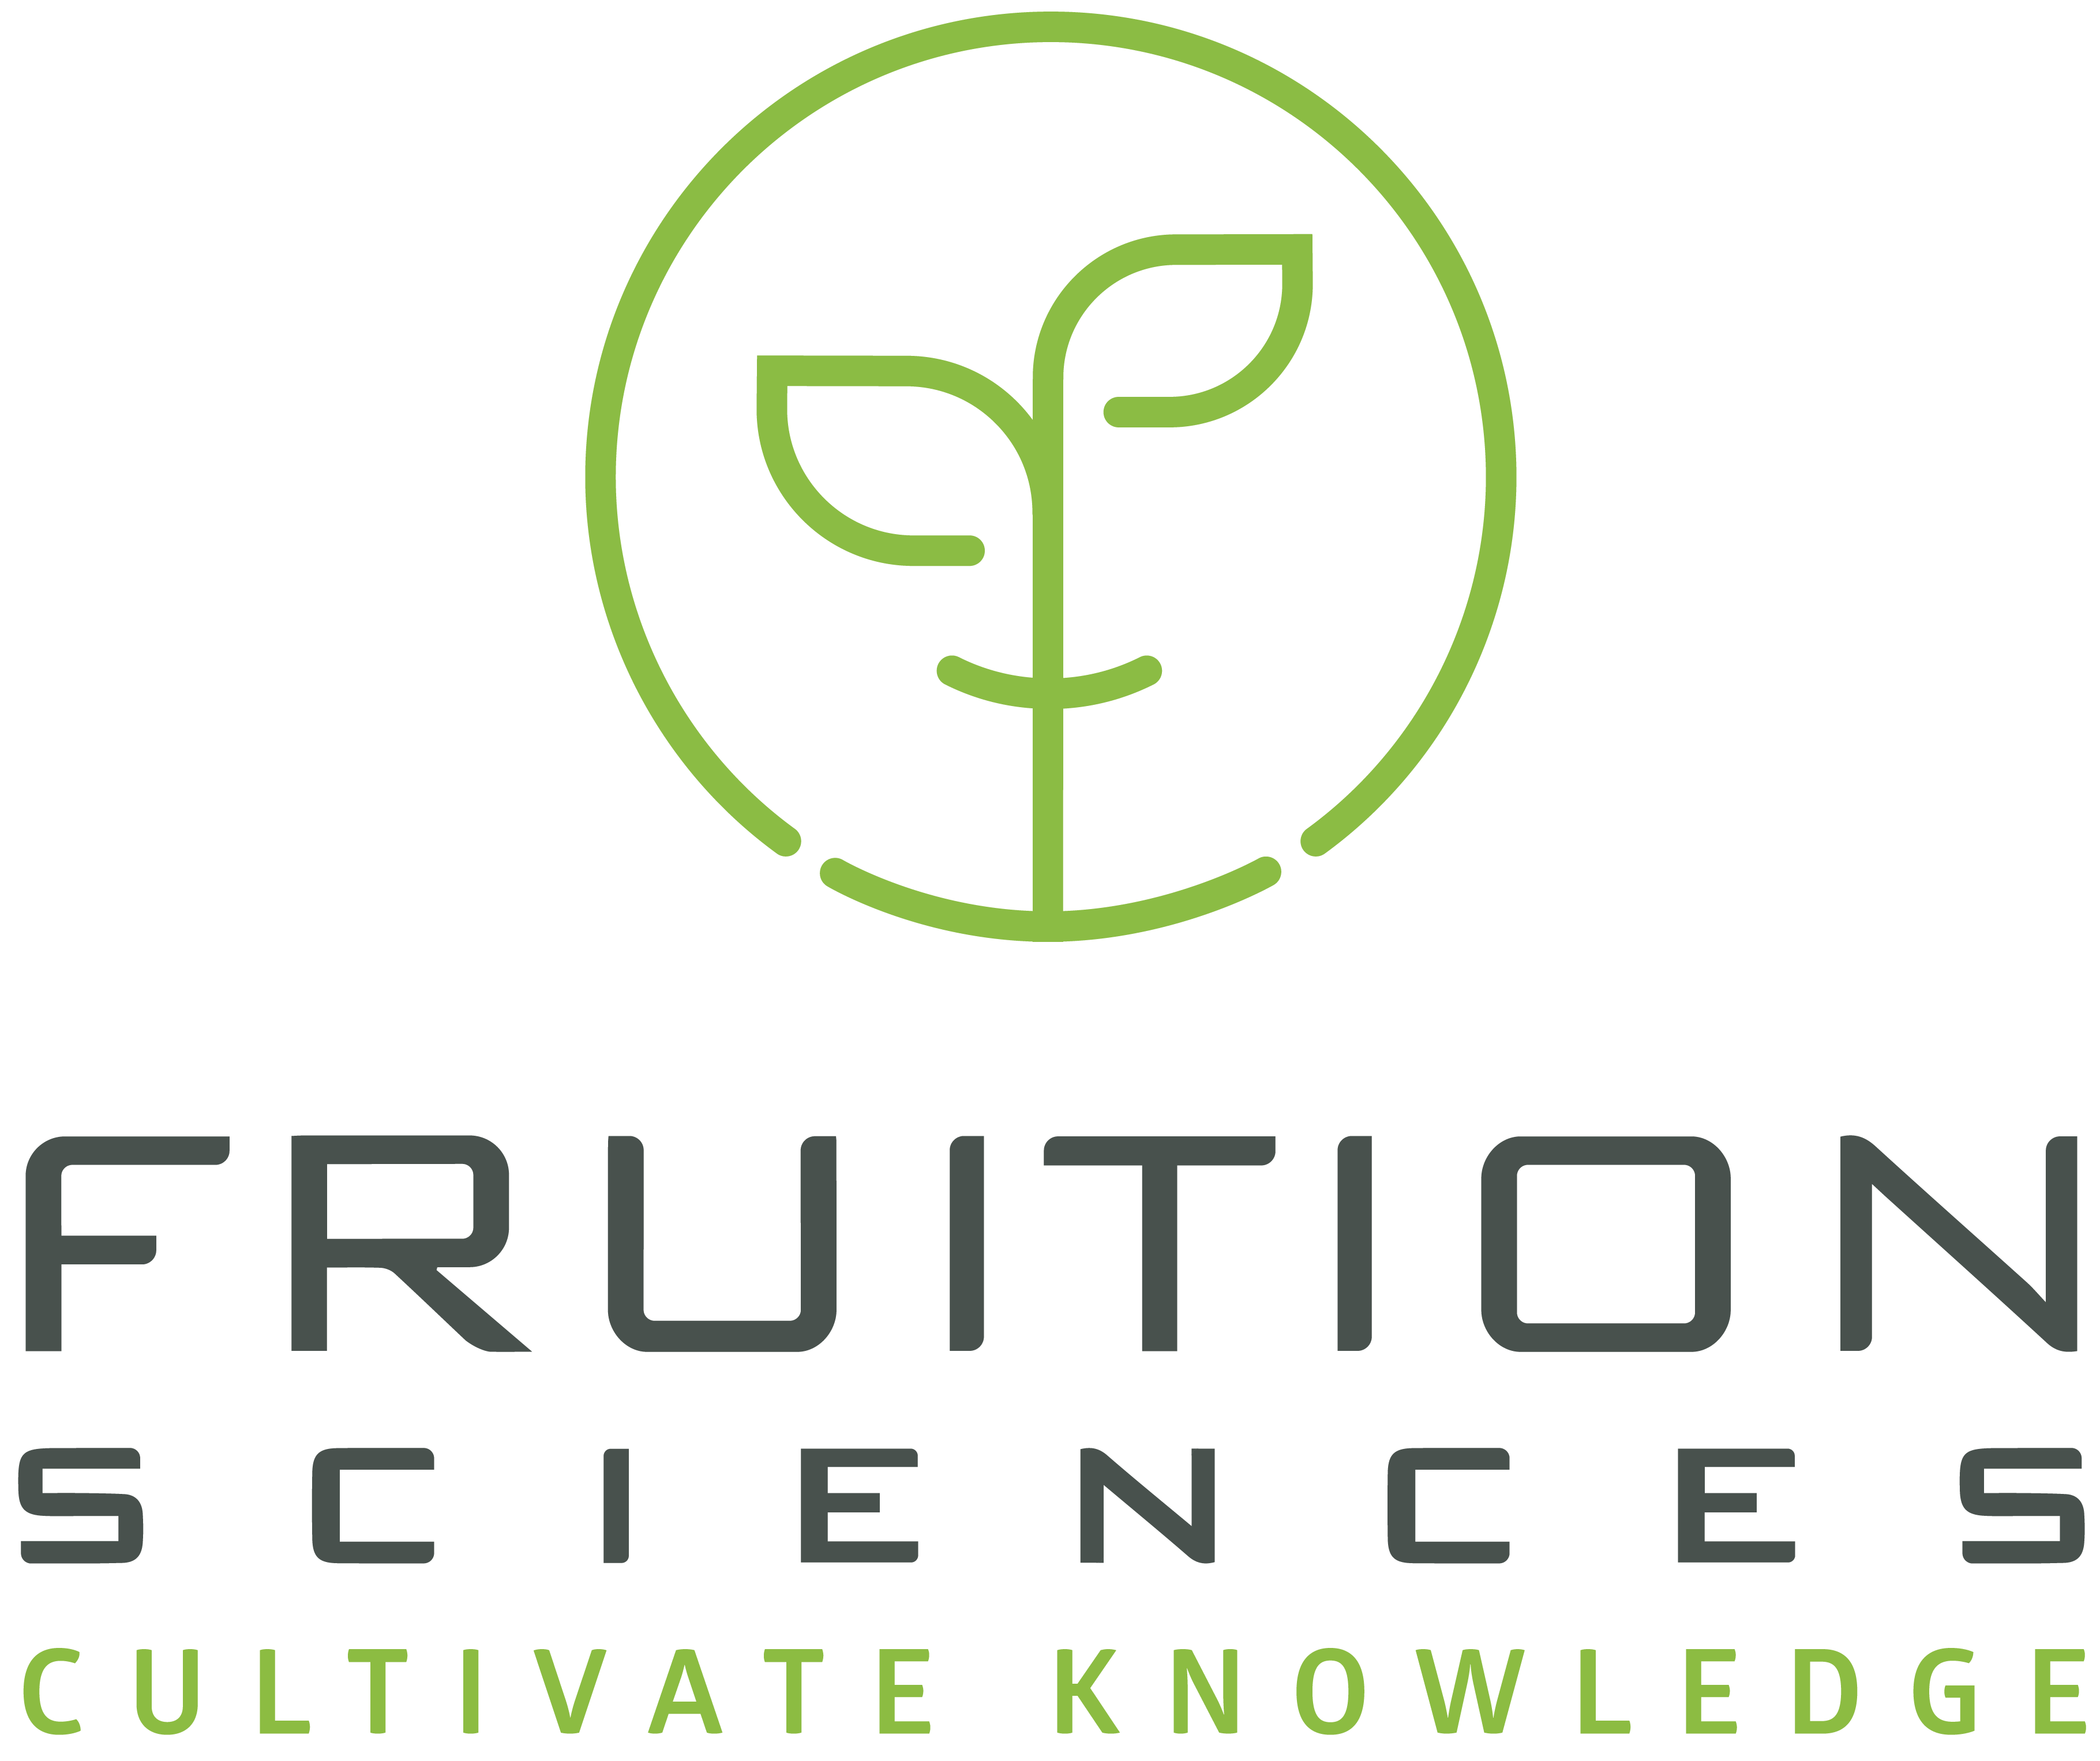 Fruition Sciences